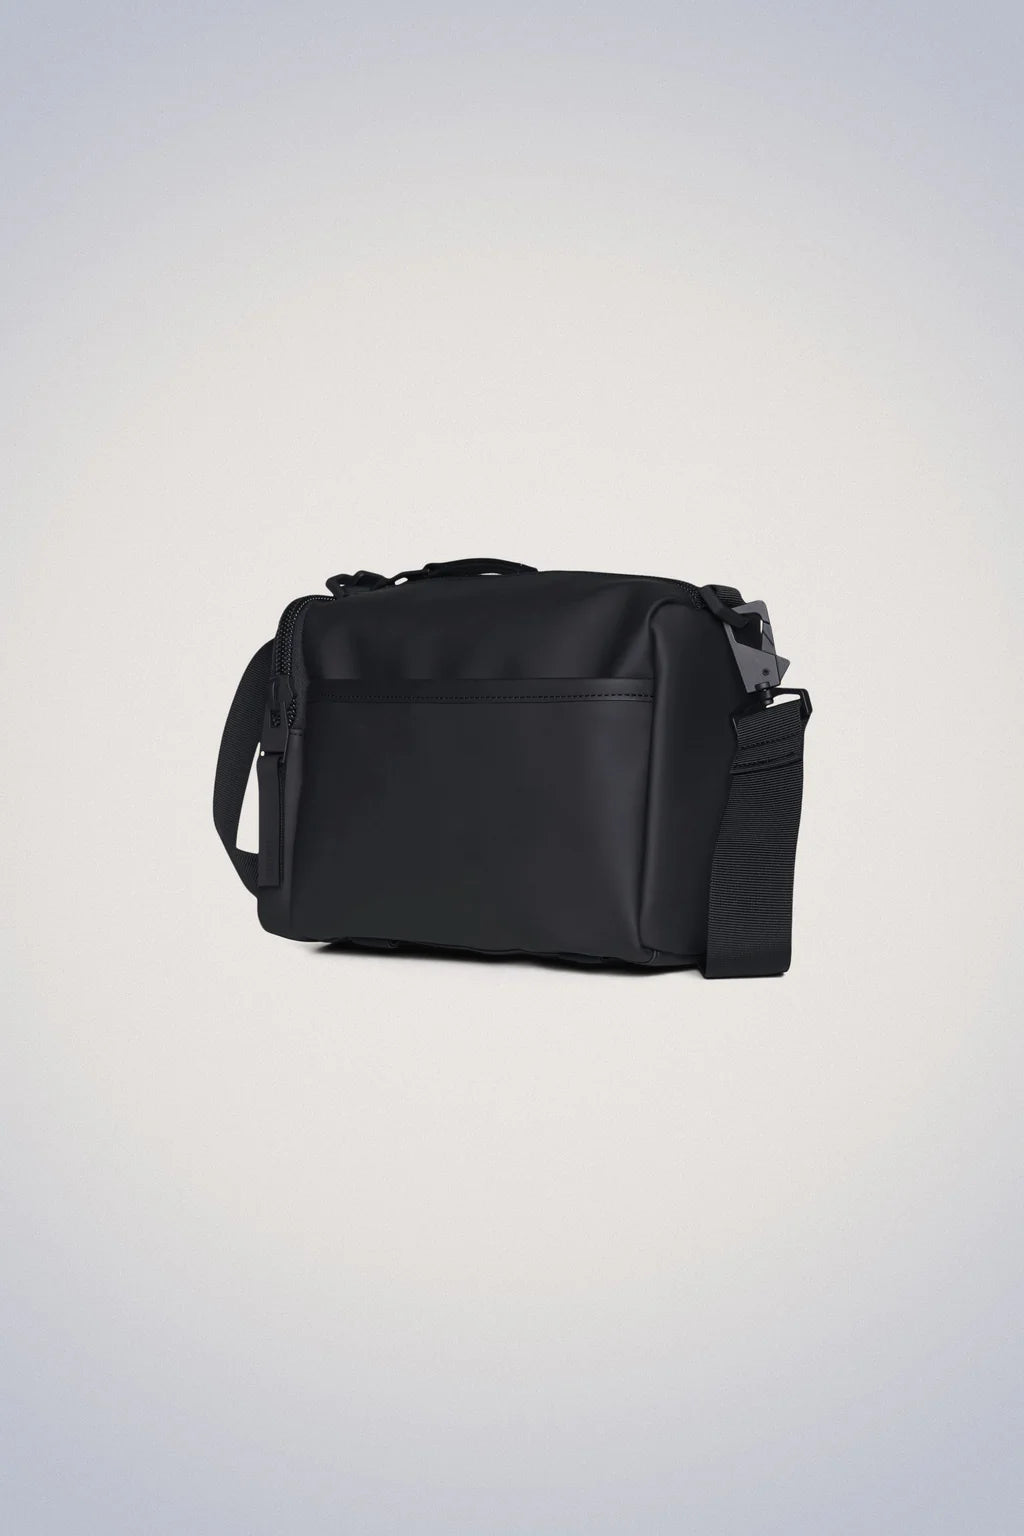 Texel Crossbody Bag Black